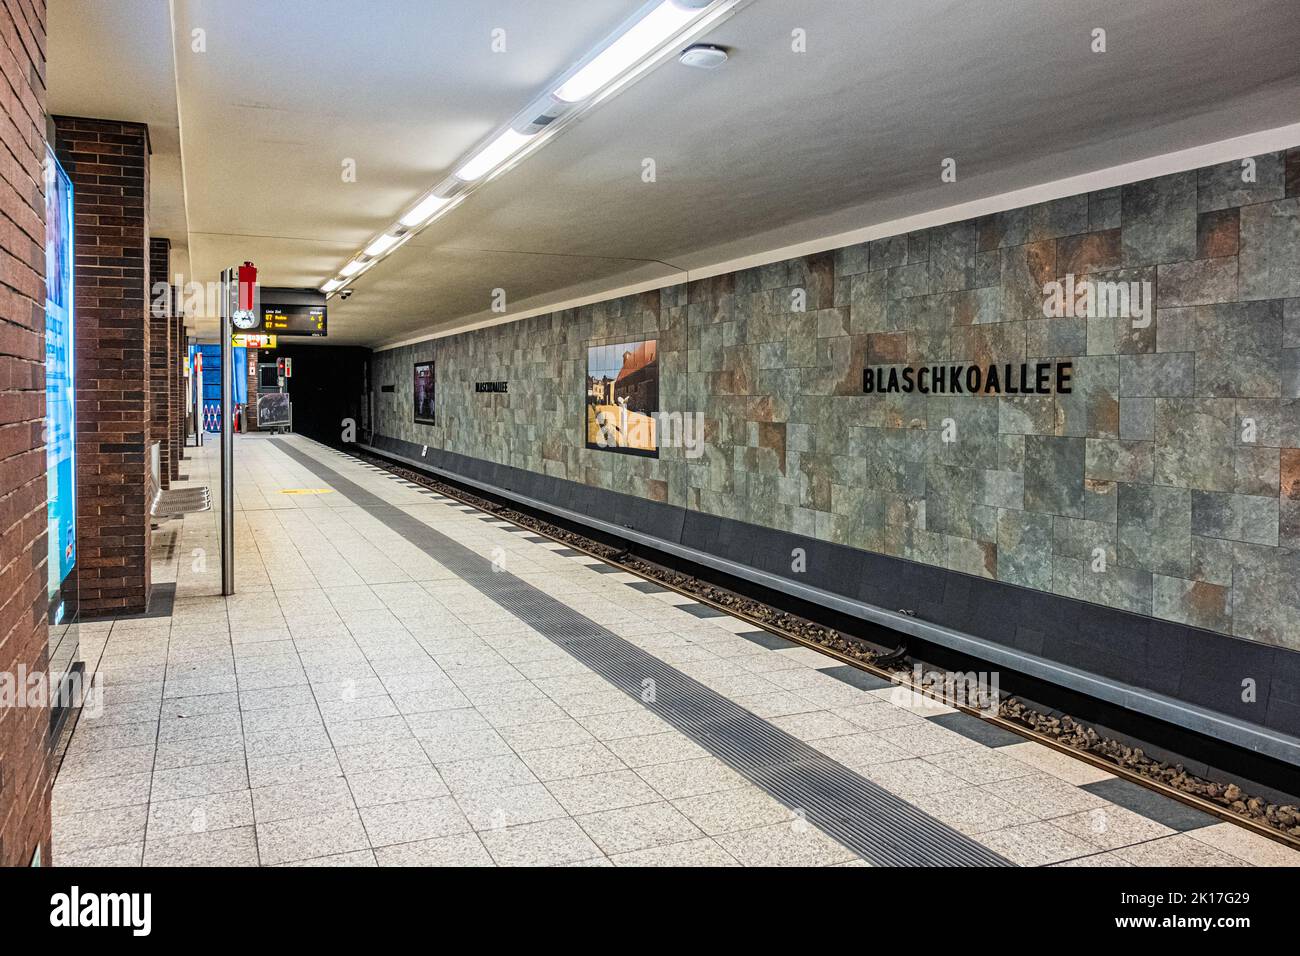 Blaschkoallee Underground U-bahn railway station serves the U7 Line, Britz, Neukölln, Berlin. Interior with large tiles and photograph Stock Photo